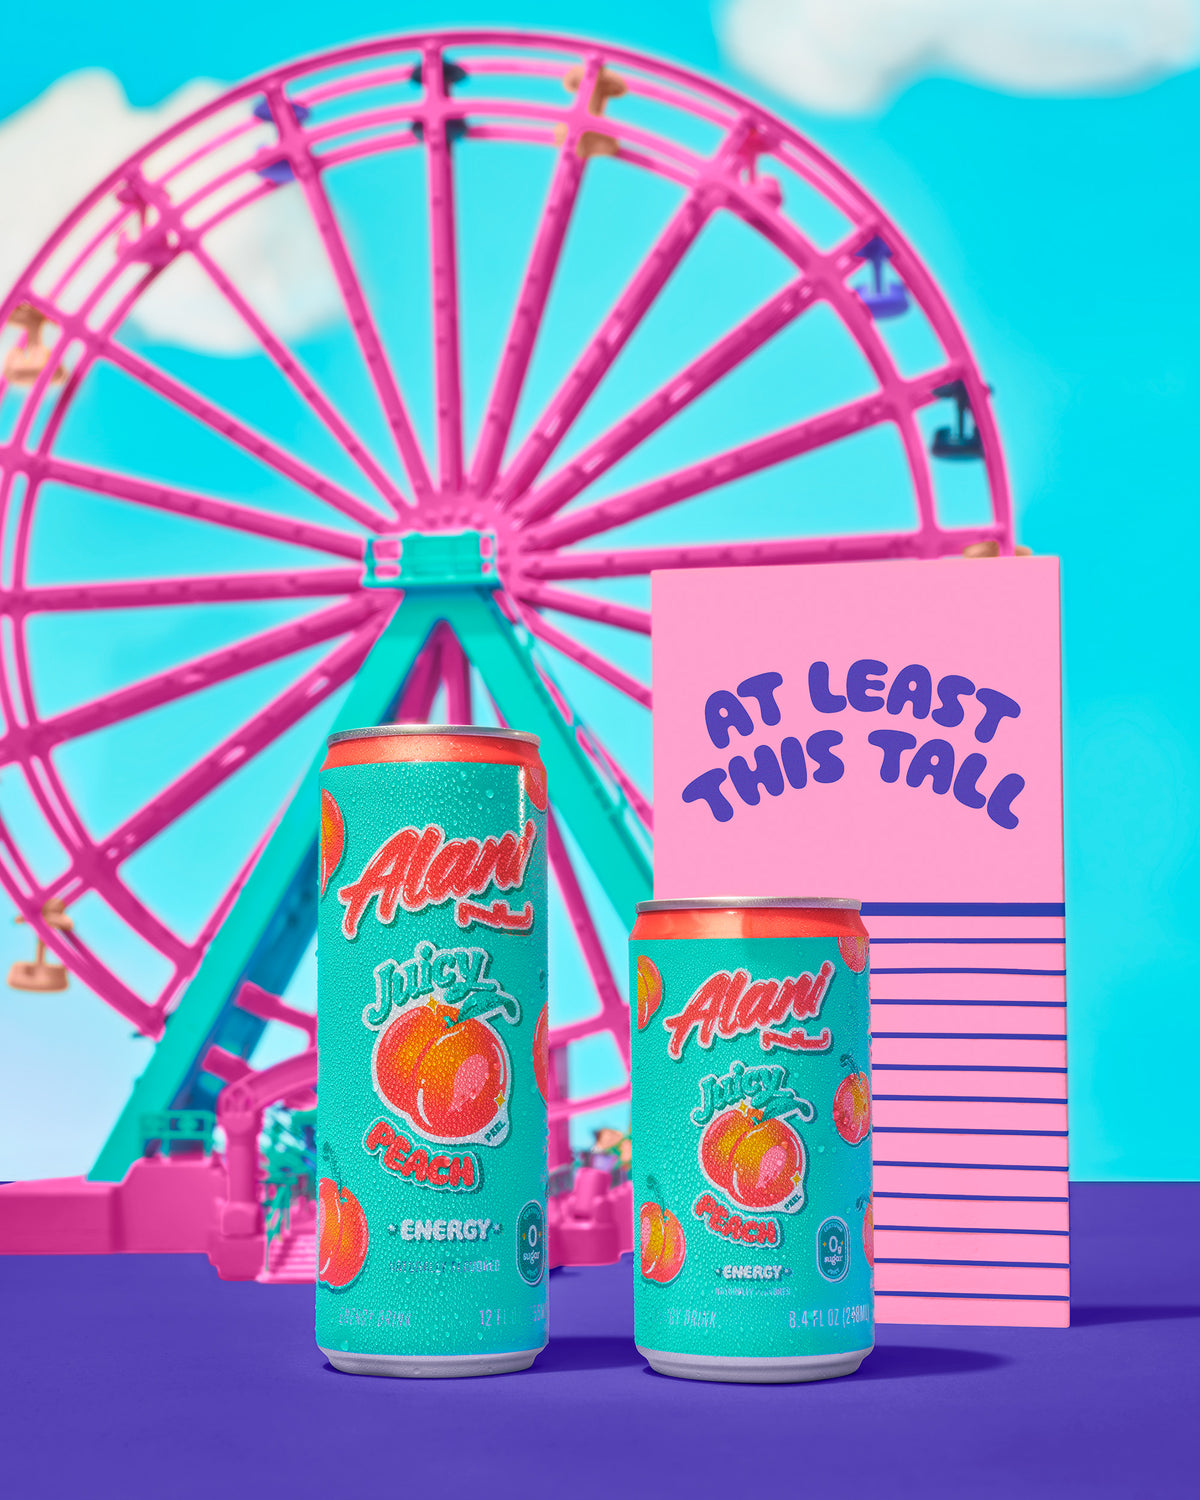 Mini Energy in Juicy Peach flavor next to a pink carousel fair ride. 